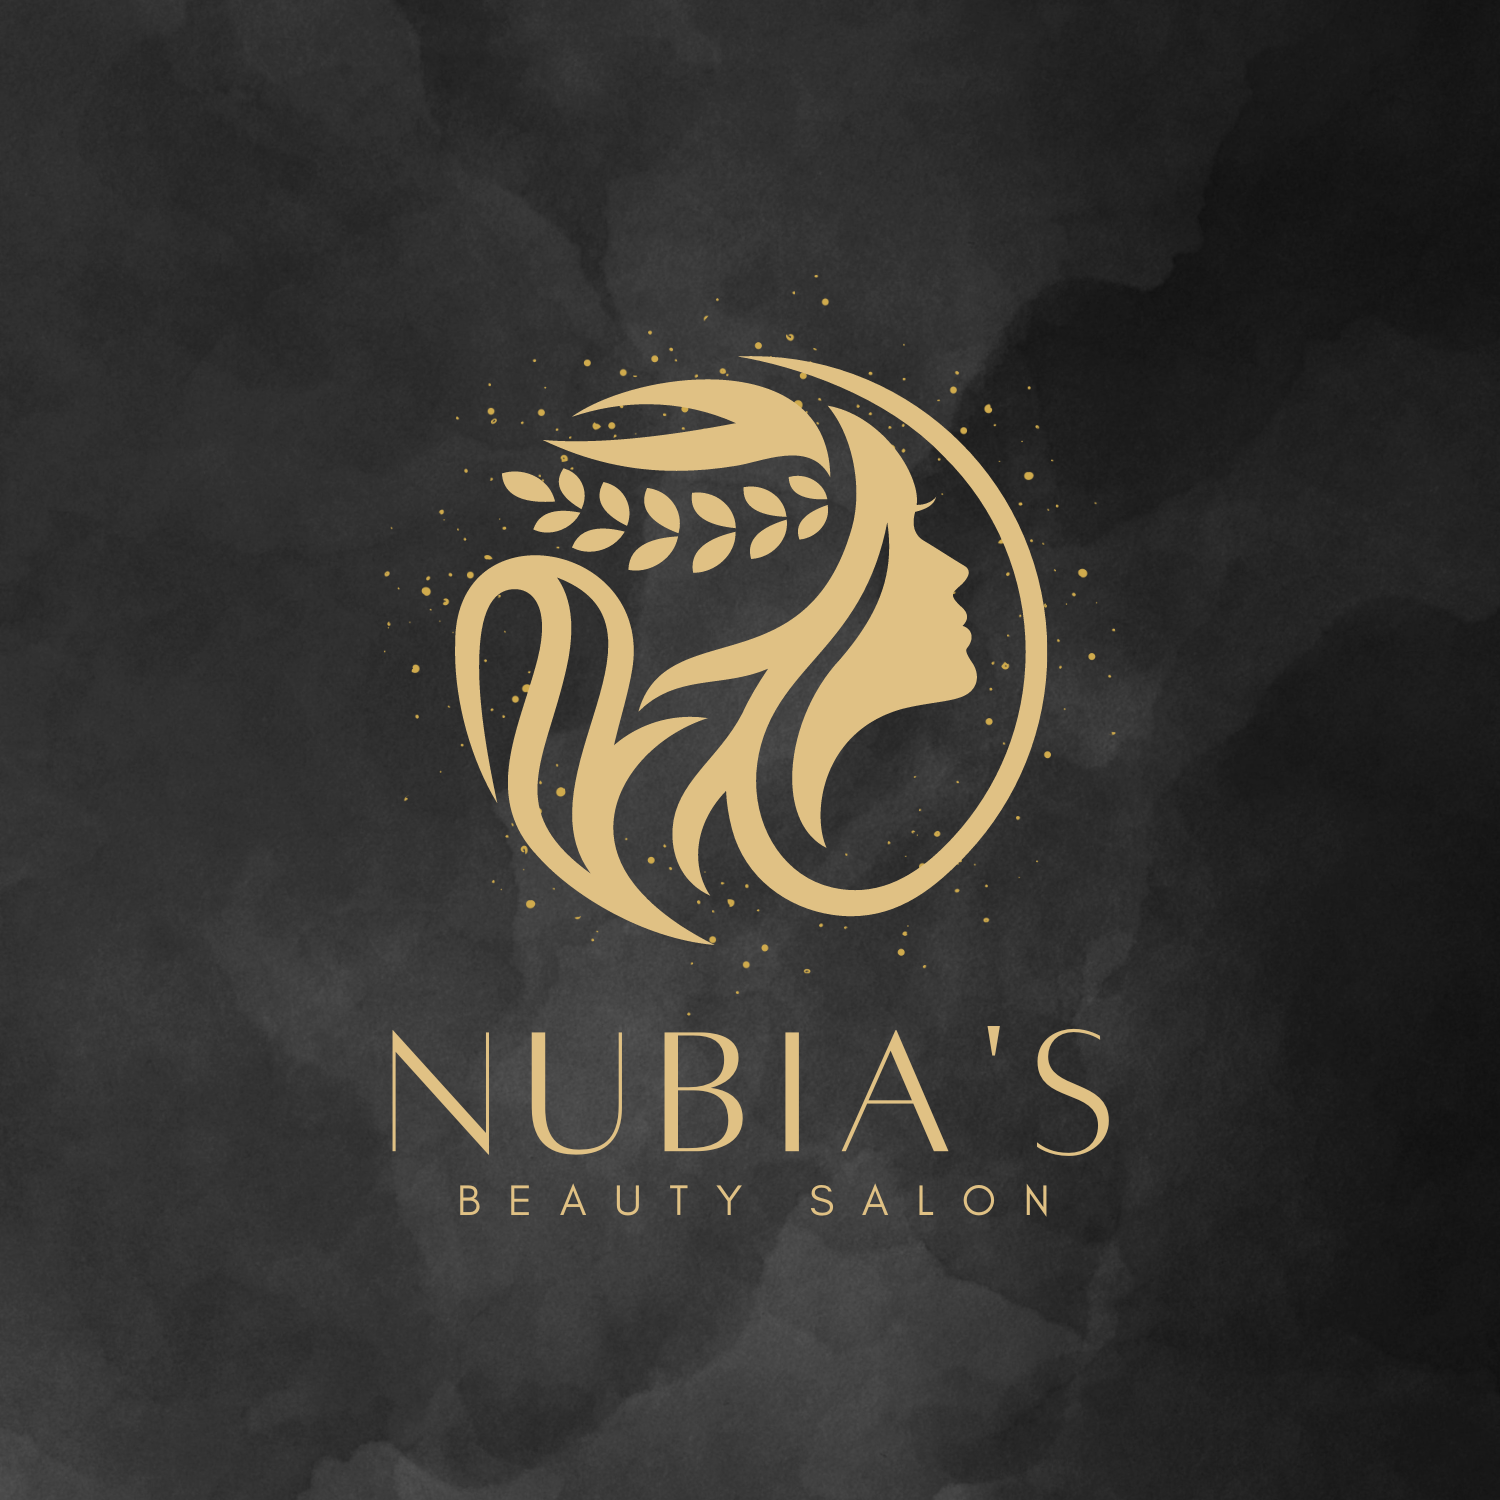 Nubia's Beauty